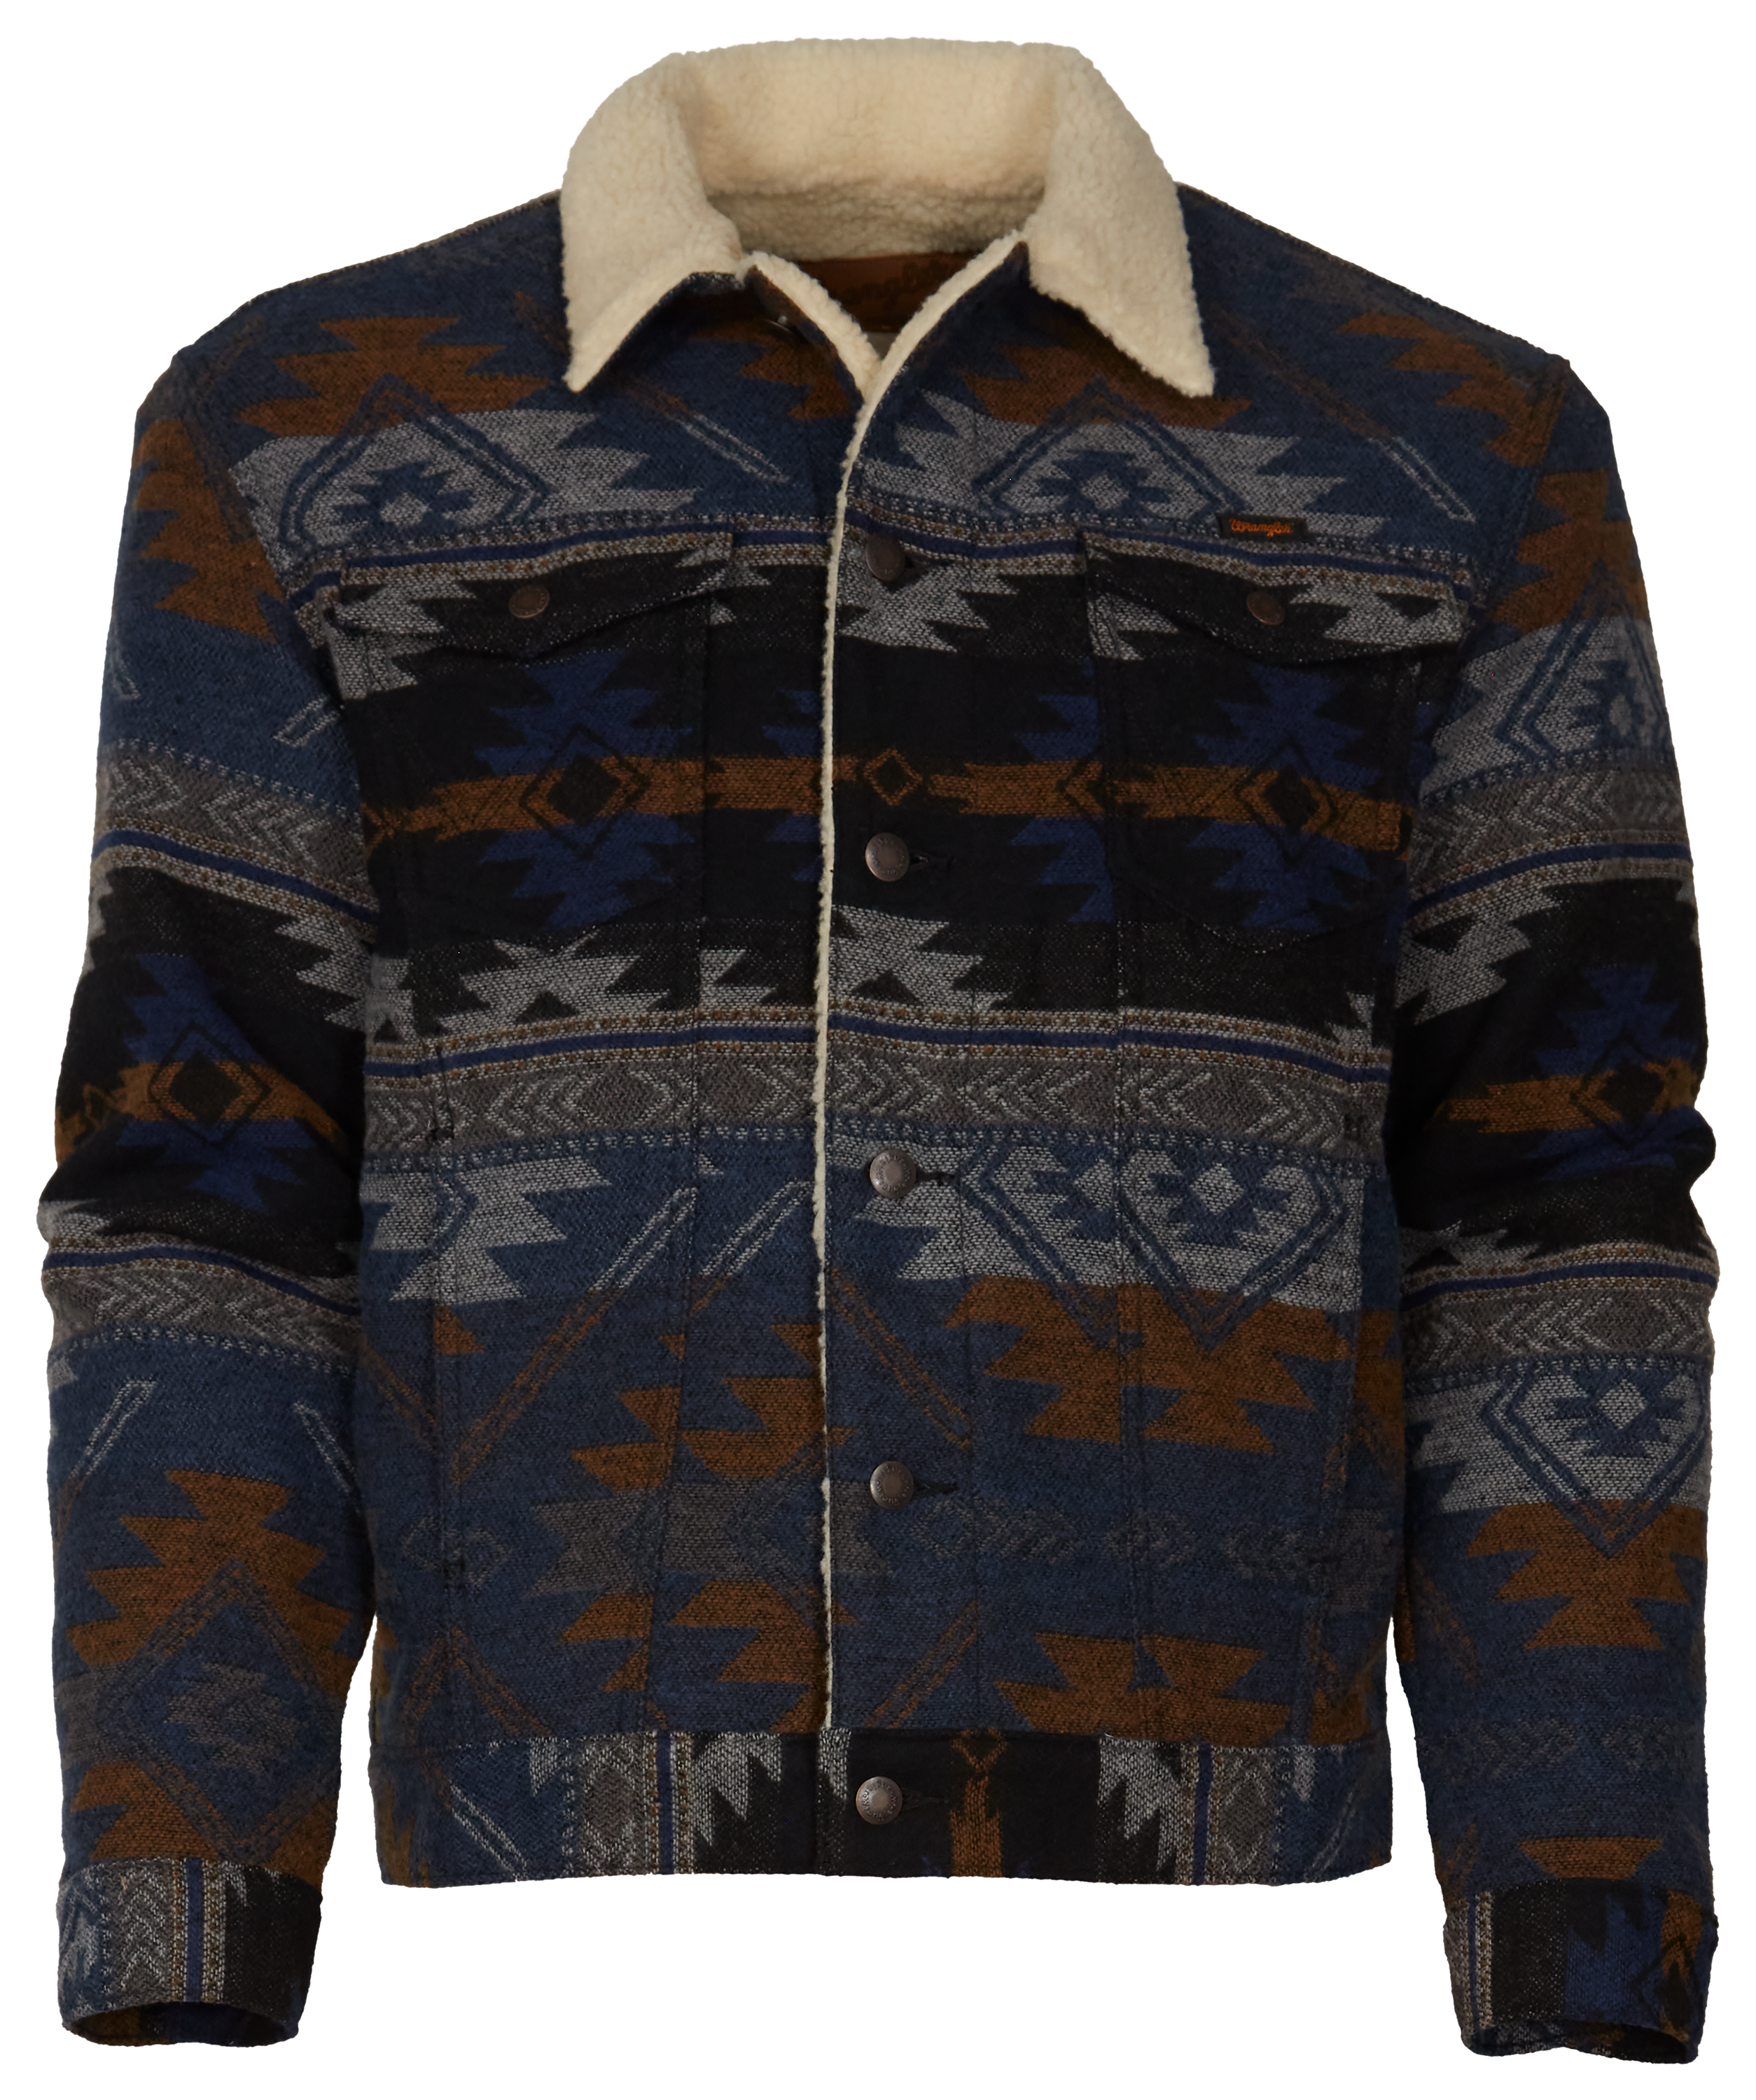 Men's Wrangler® Sherpa Lined Jacquard Print Jacket in Blue Depths